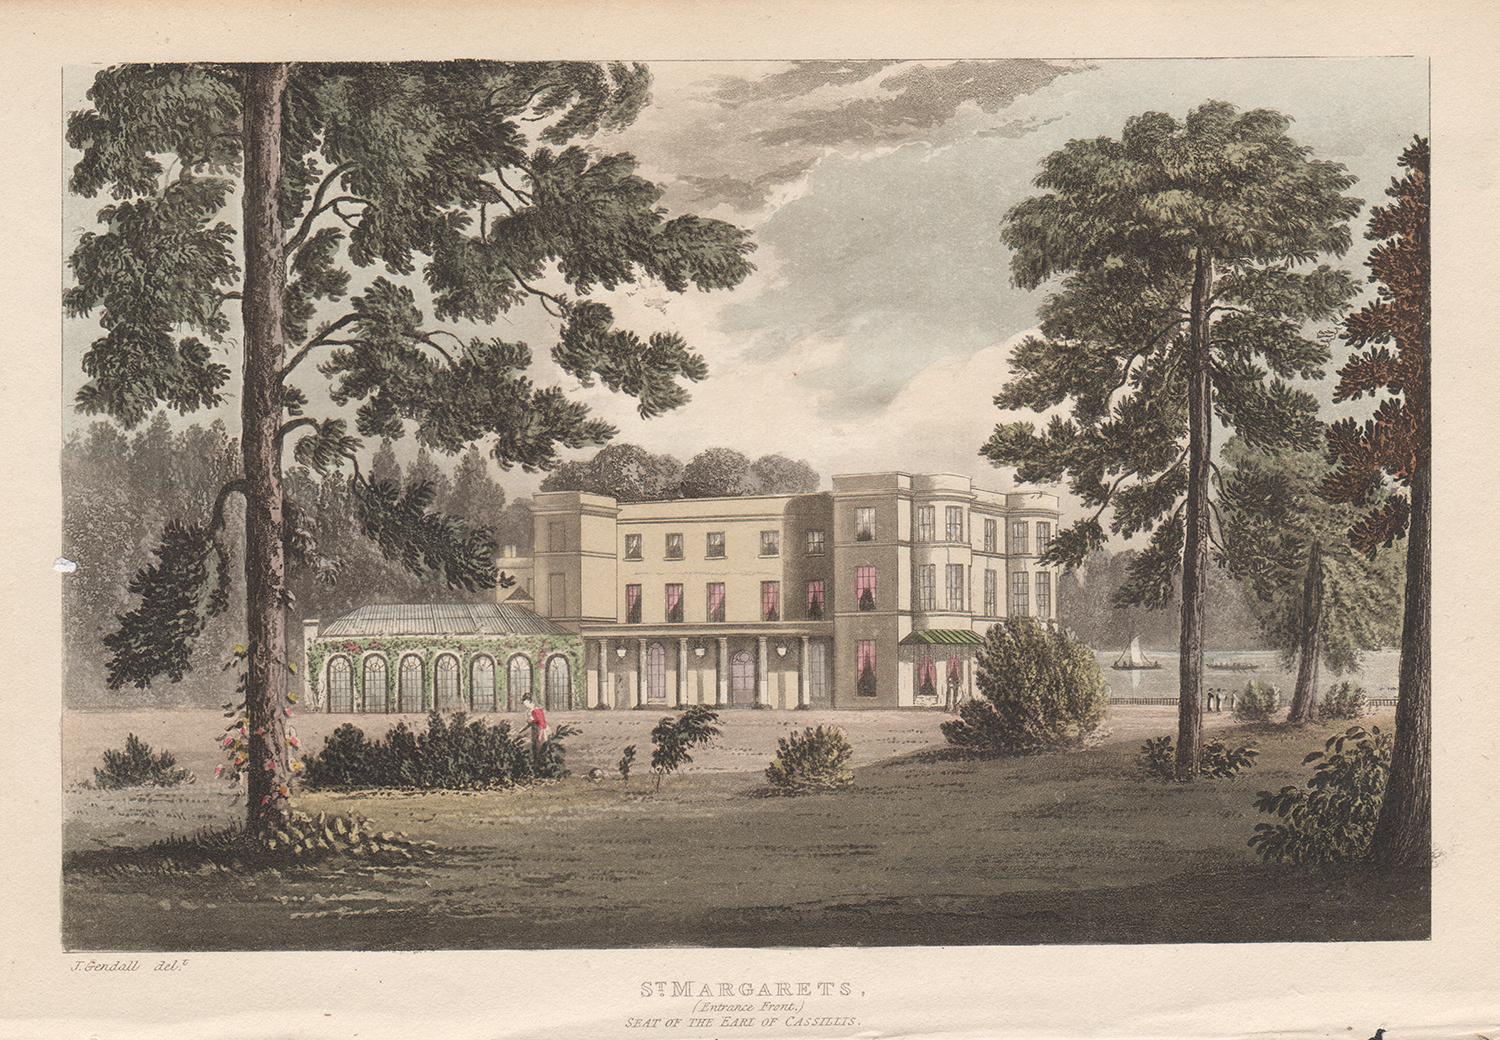 St Margarets, Isleworth, englische Regency-Landhausfarbene Aquatinta in St. Margarets, 1818